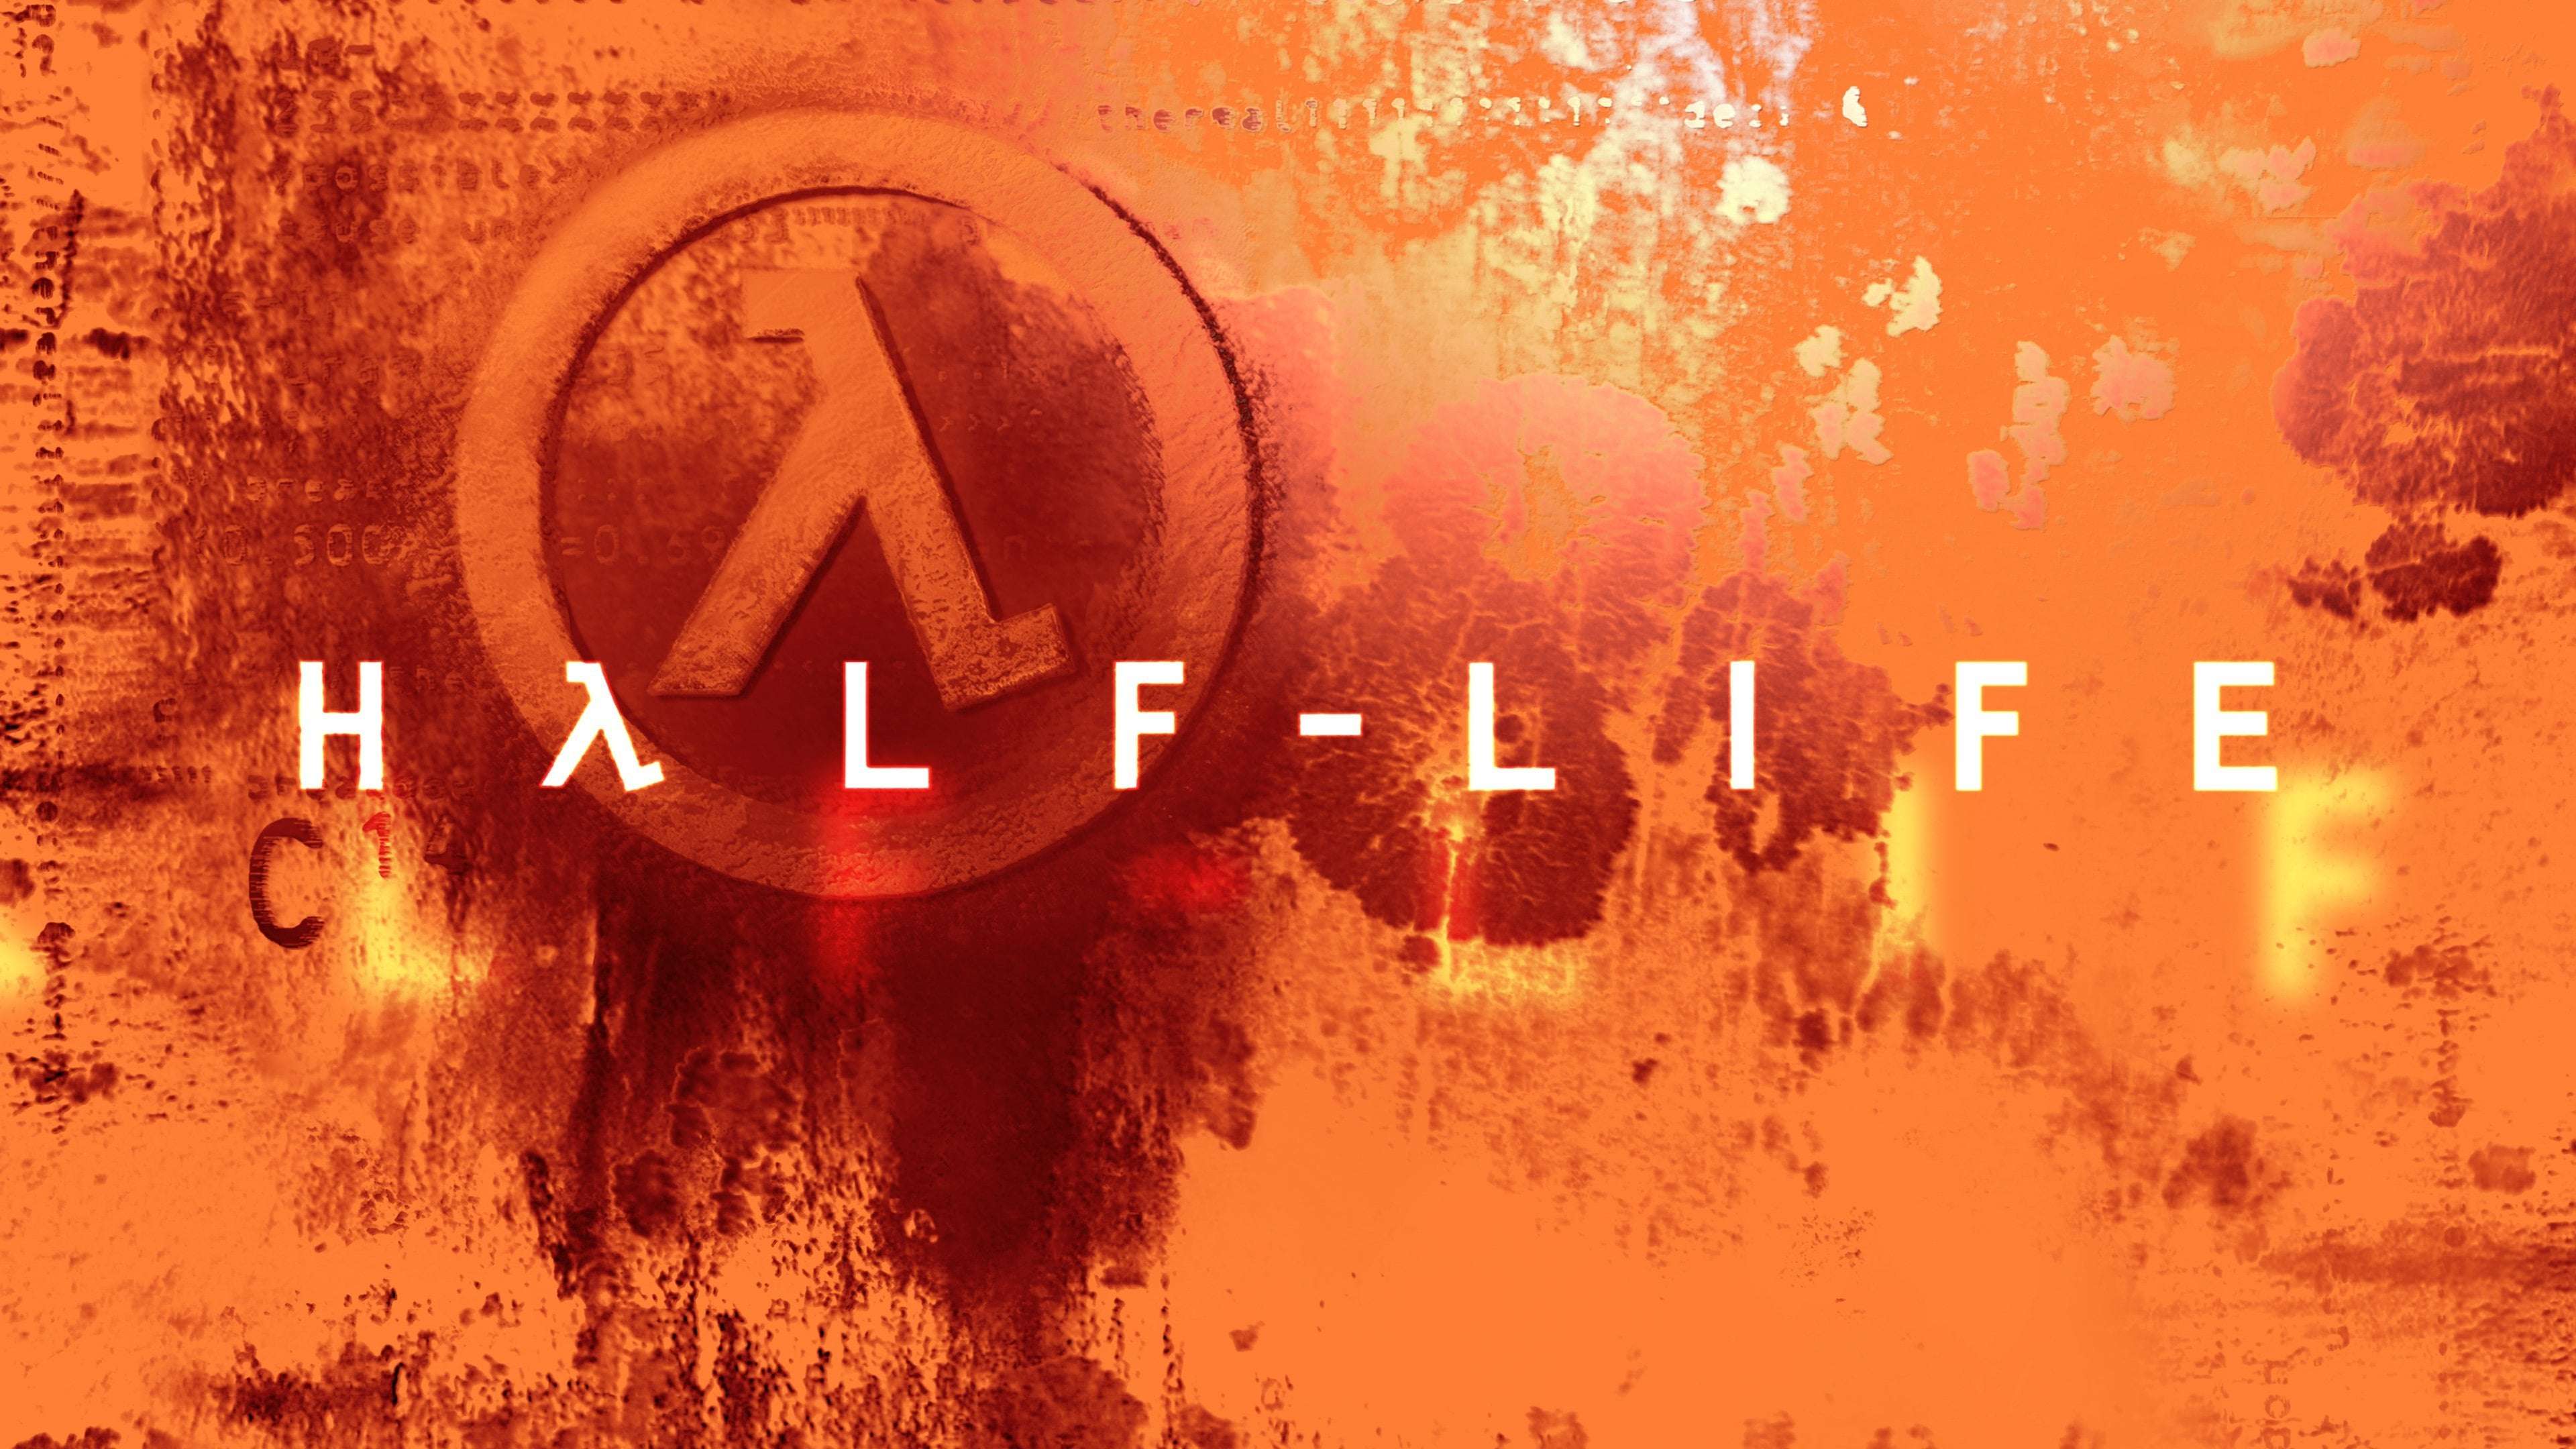 image for Valve marks Half-Lifeâs 25th anniversary with game update and documentary